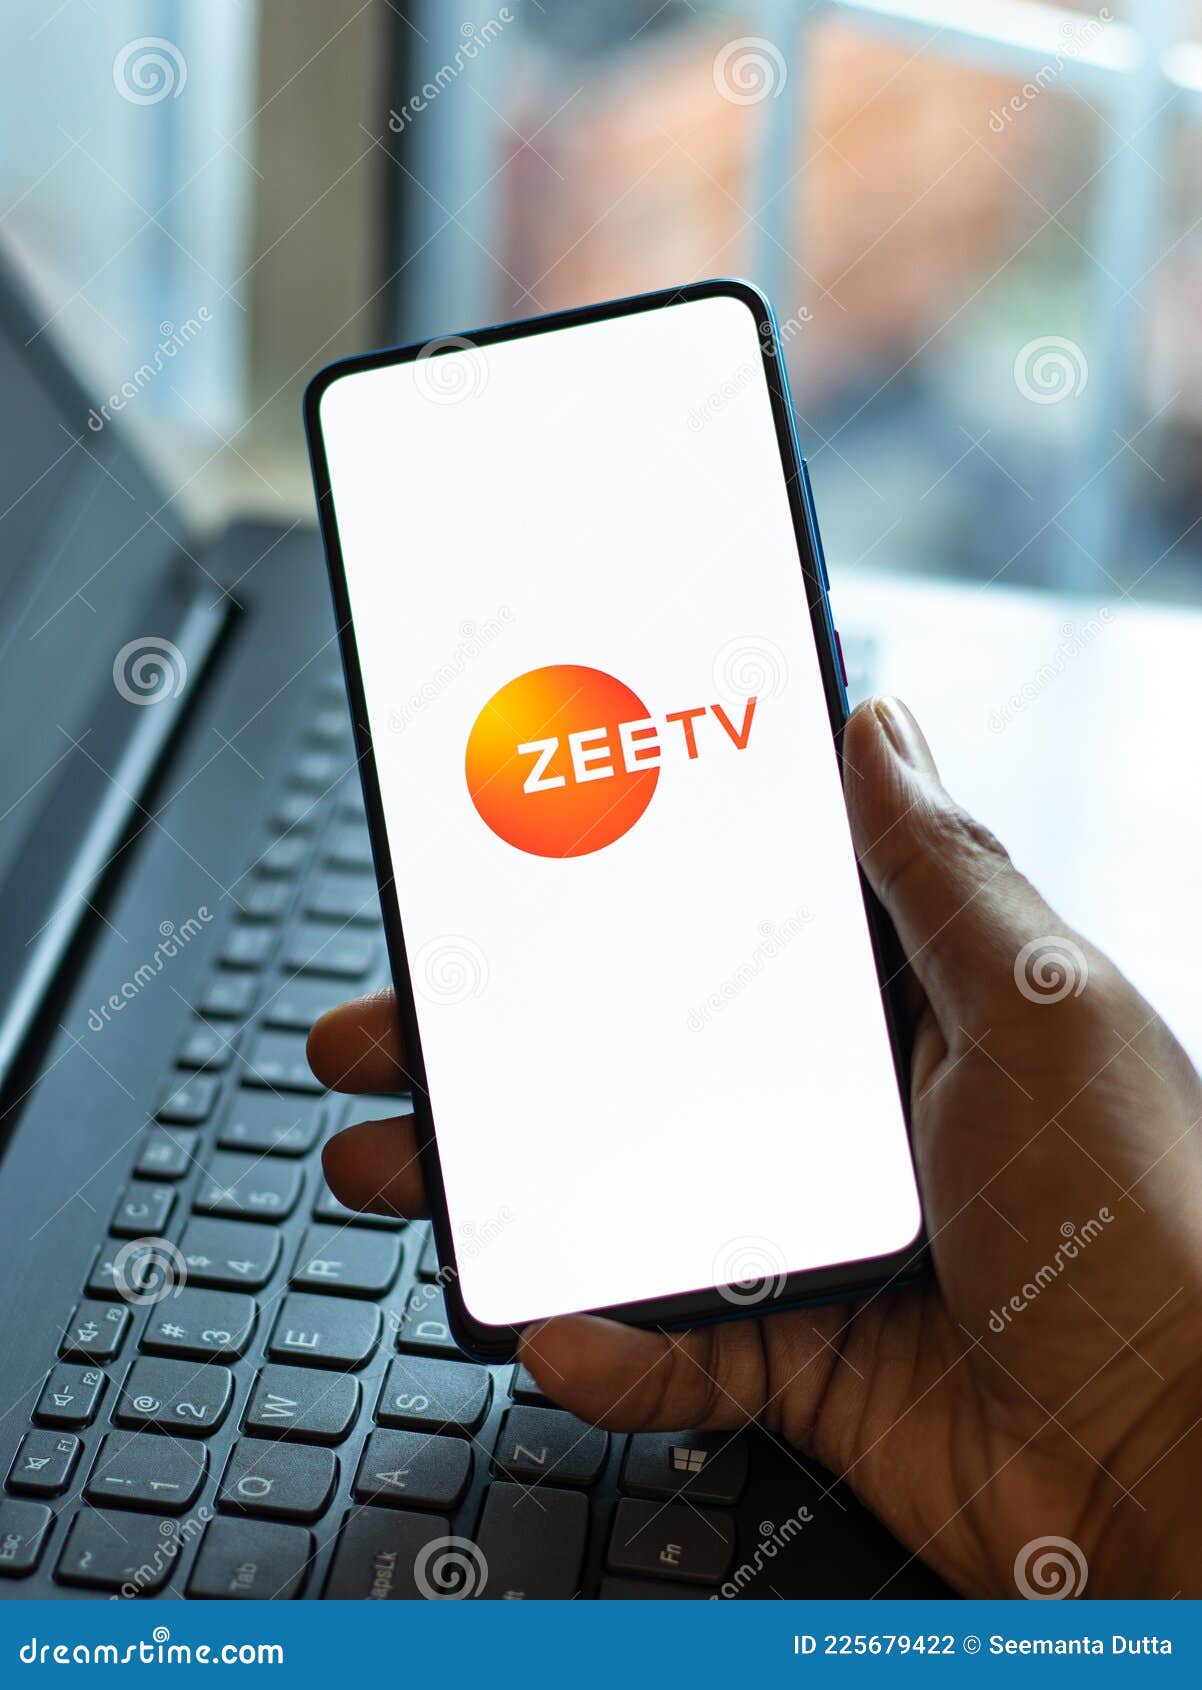 How to make Zee TV logo design in Corel draw 2021 Tutorial - Corel Draw  2021 Tutorial Hindi - YouTube